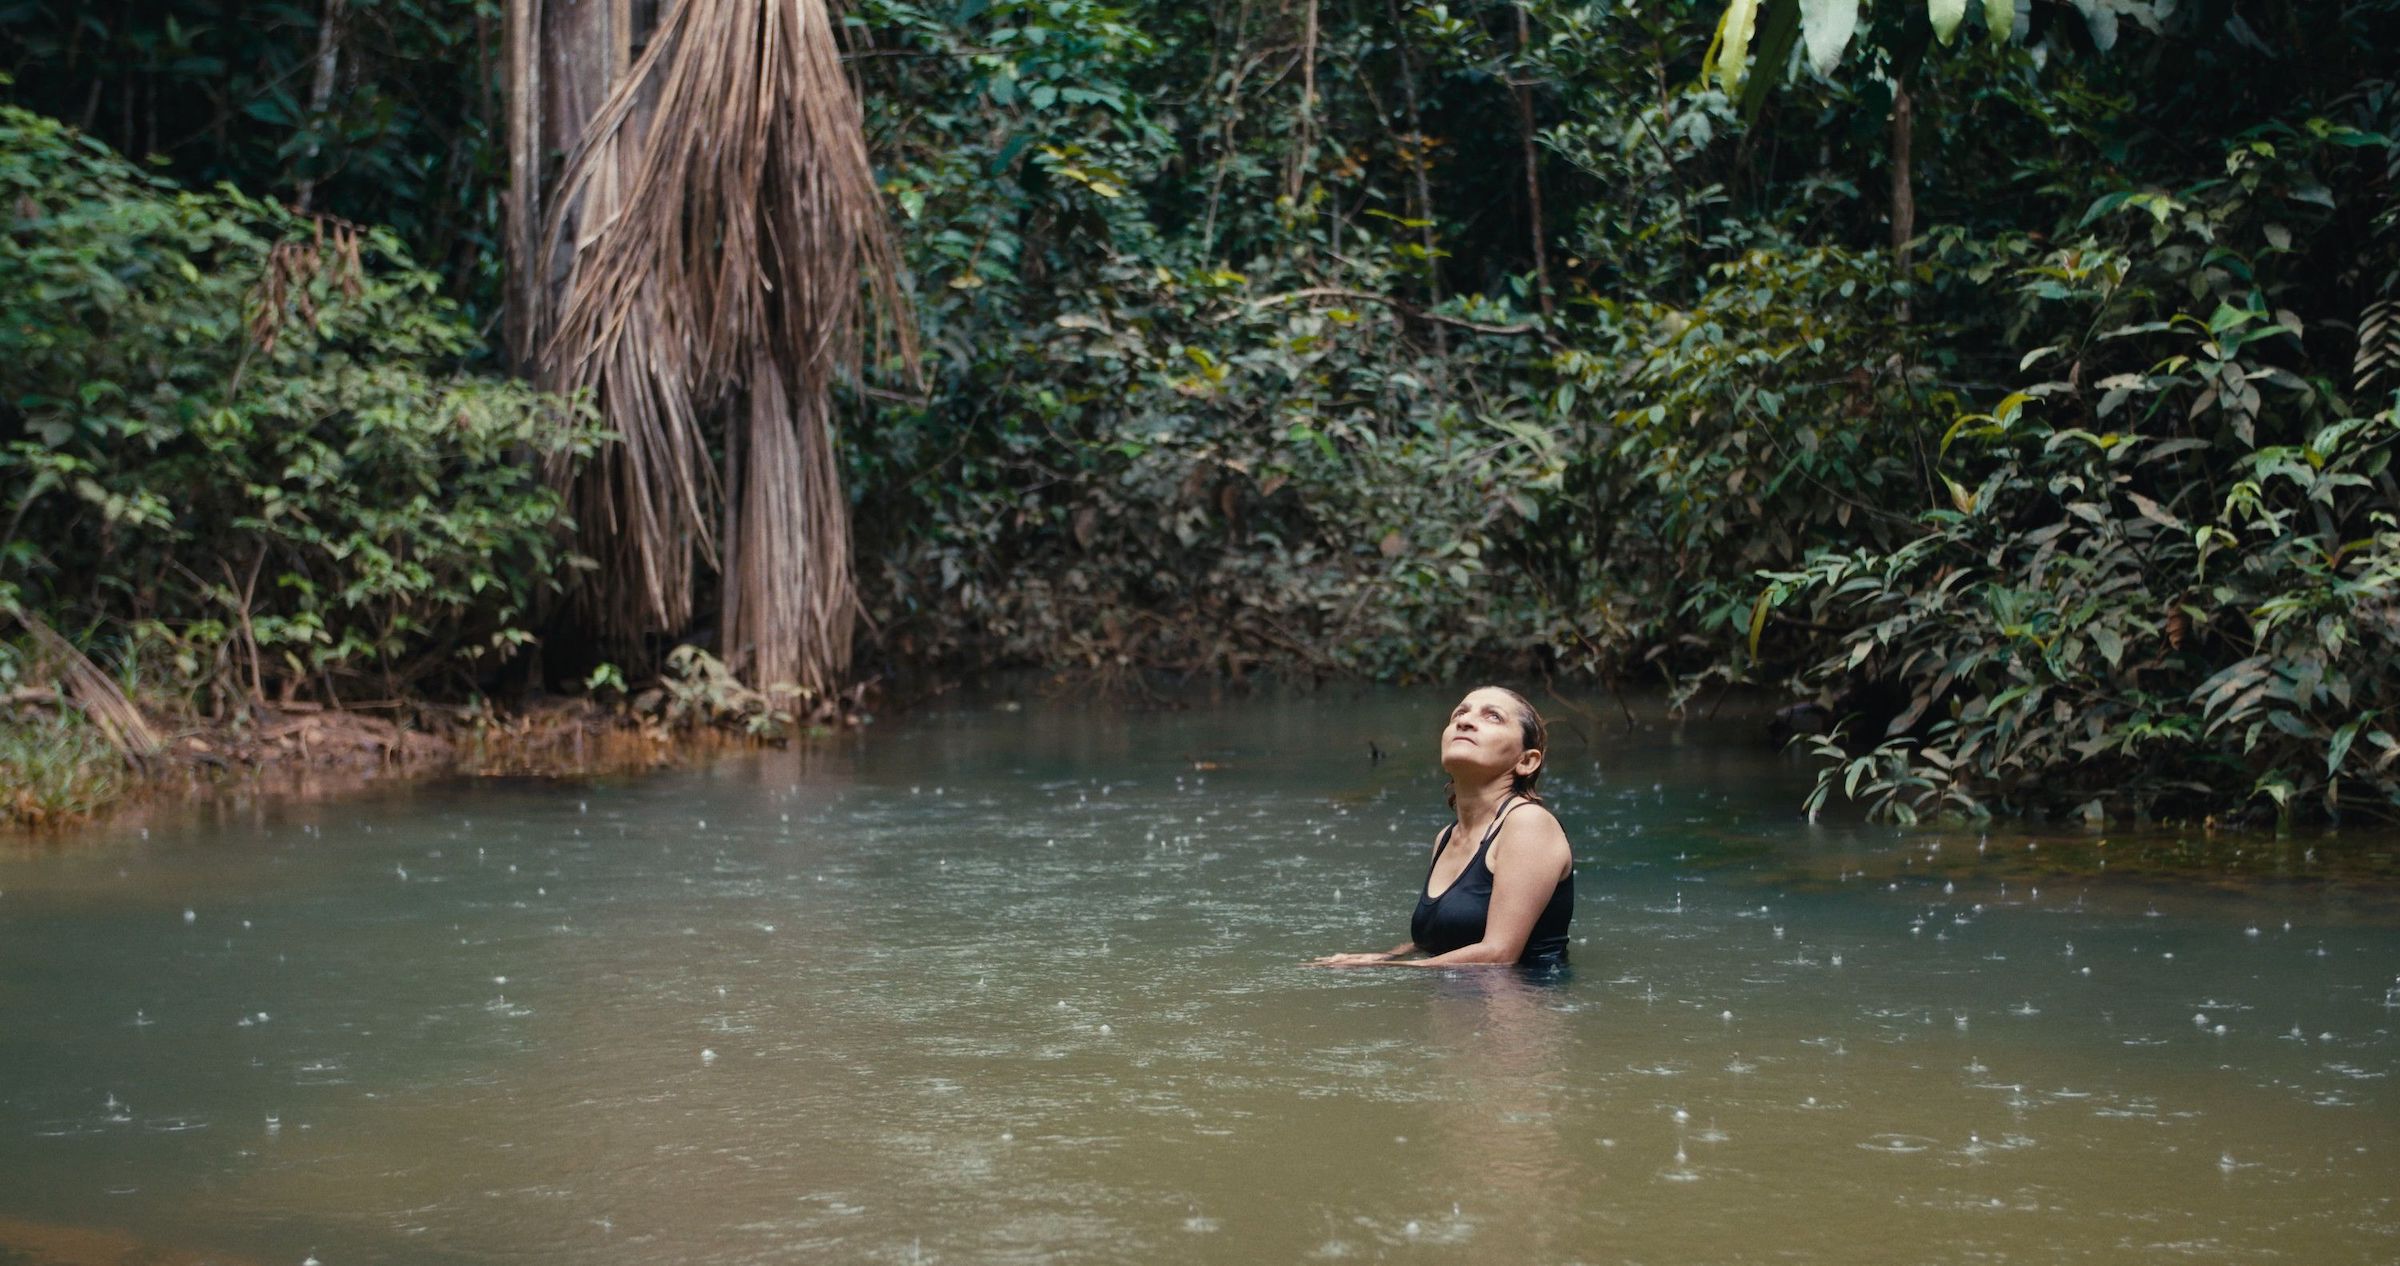 Neidinha Bandeira, an environmental activist, bathes in the river in the Amazon rainforest. (Alex Pritz—Amazon Land Documentary)